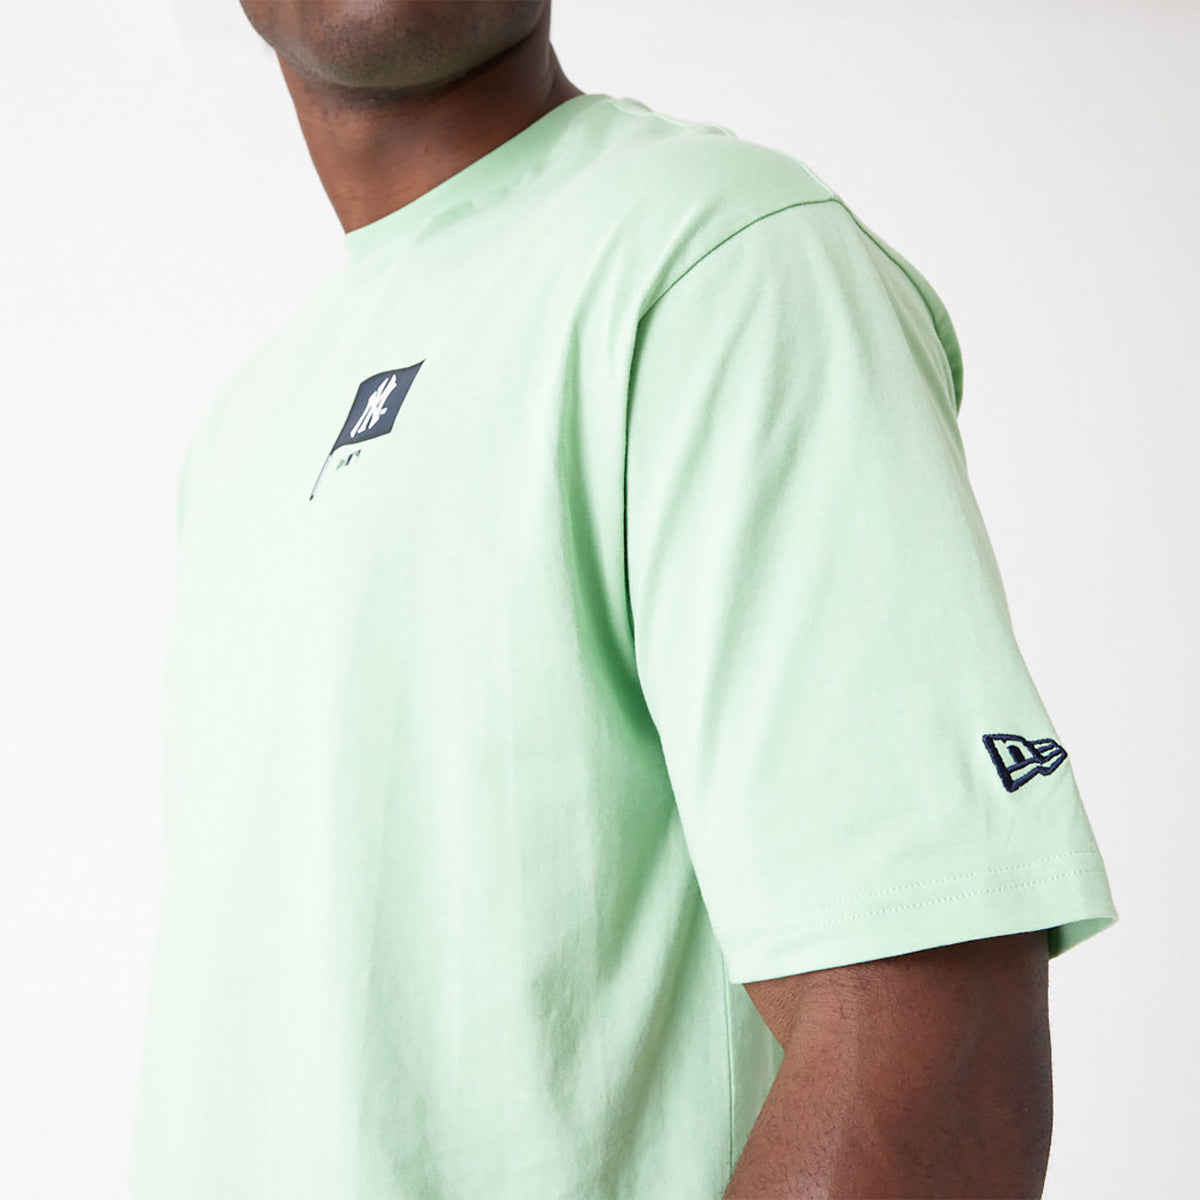 New Era New York Yankees MLB Burger Graphic Oversized T-Shirt Light Green - Soulsideshop